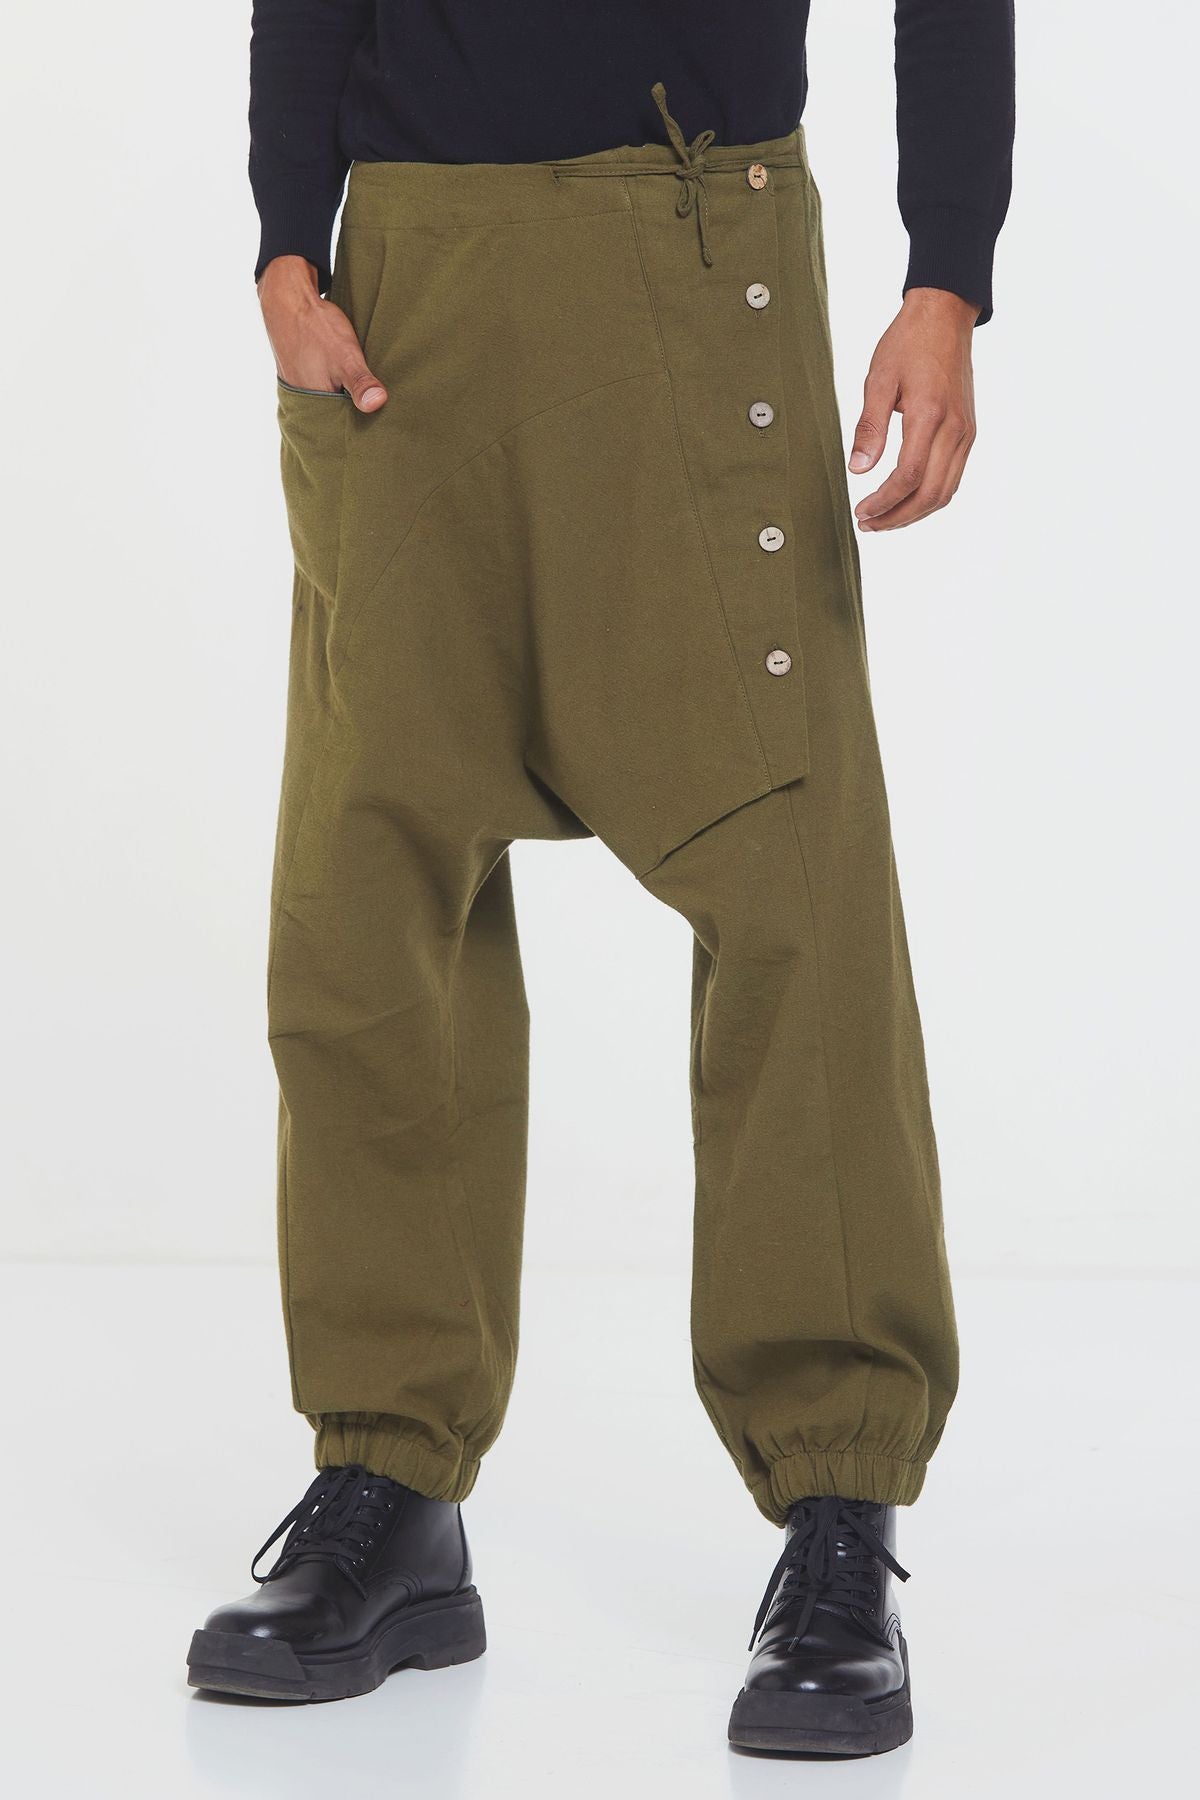 Elastic Cuff Men's Winter Harem Pants with Pocket Khaki